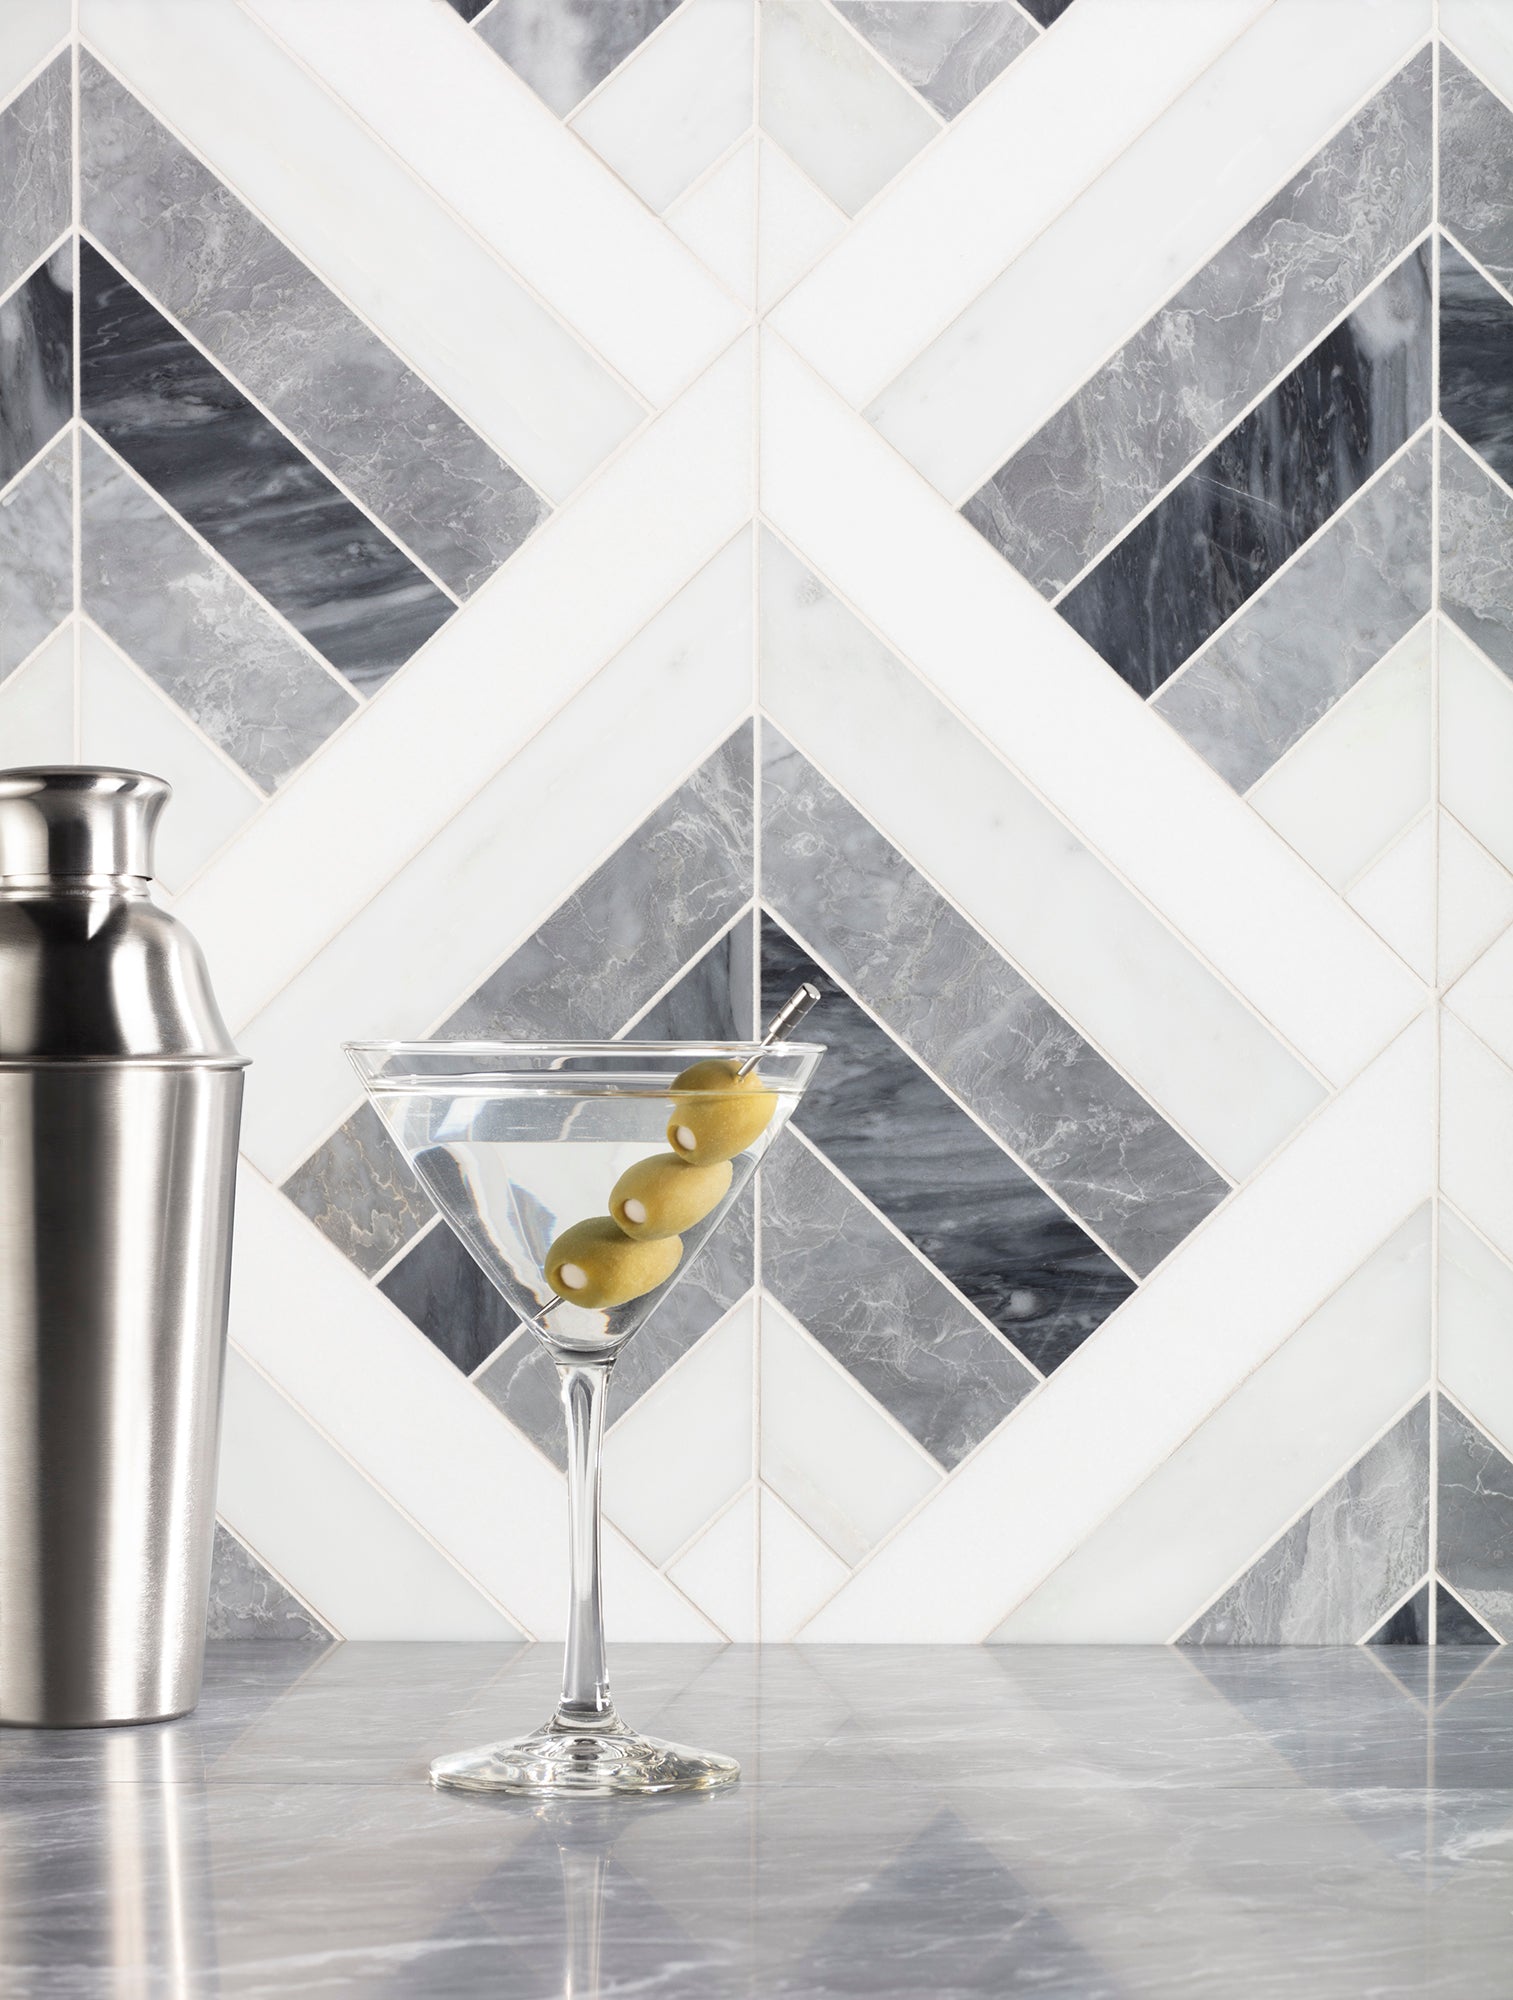 Shell Mosaic Cocktail Shaker